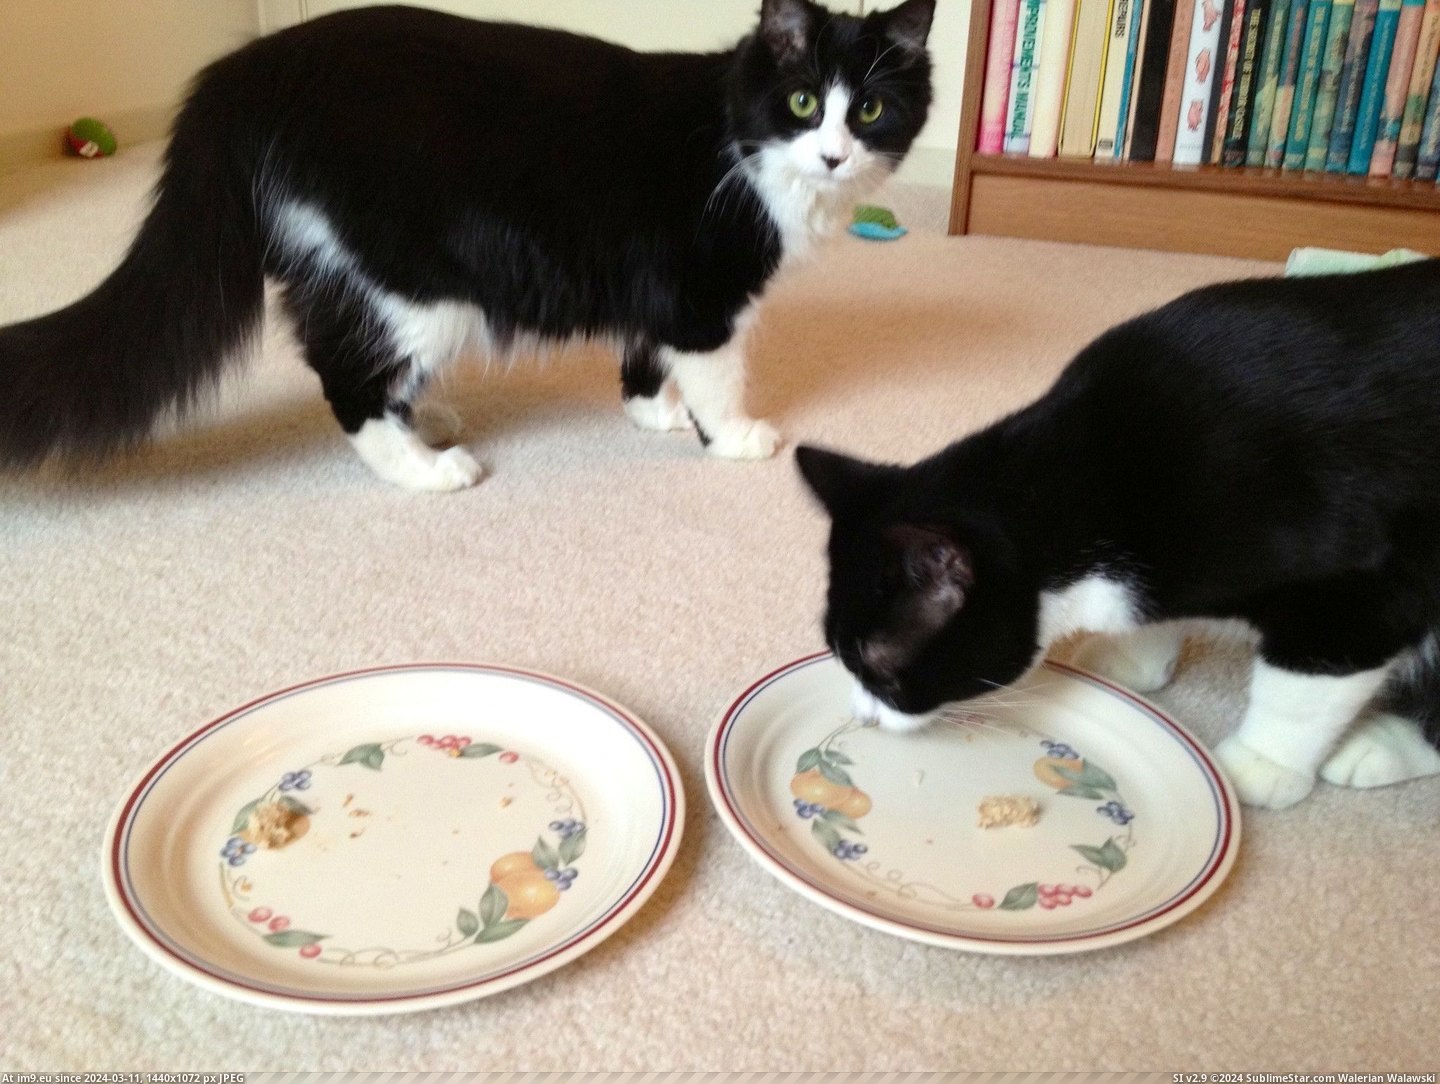 #Cats #Two #Happy #Feast #Catsgiving #Enjoying #Thanksgiving #Kitties [Cats] Just two kitties enjoying a Catsgiving feast. Happy Thanksgiving everyone! 2 Pic. (Obraz z album My r/CATS favs))